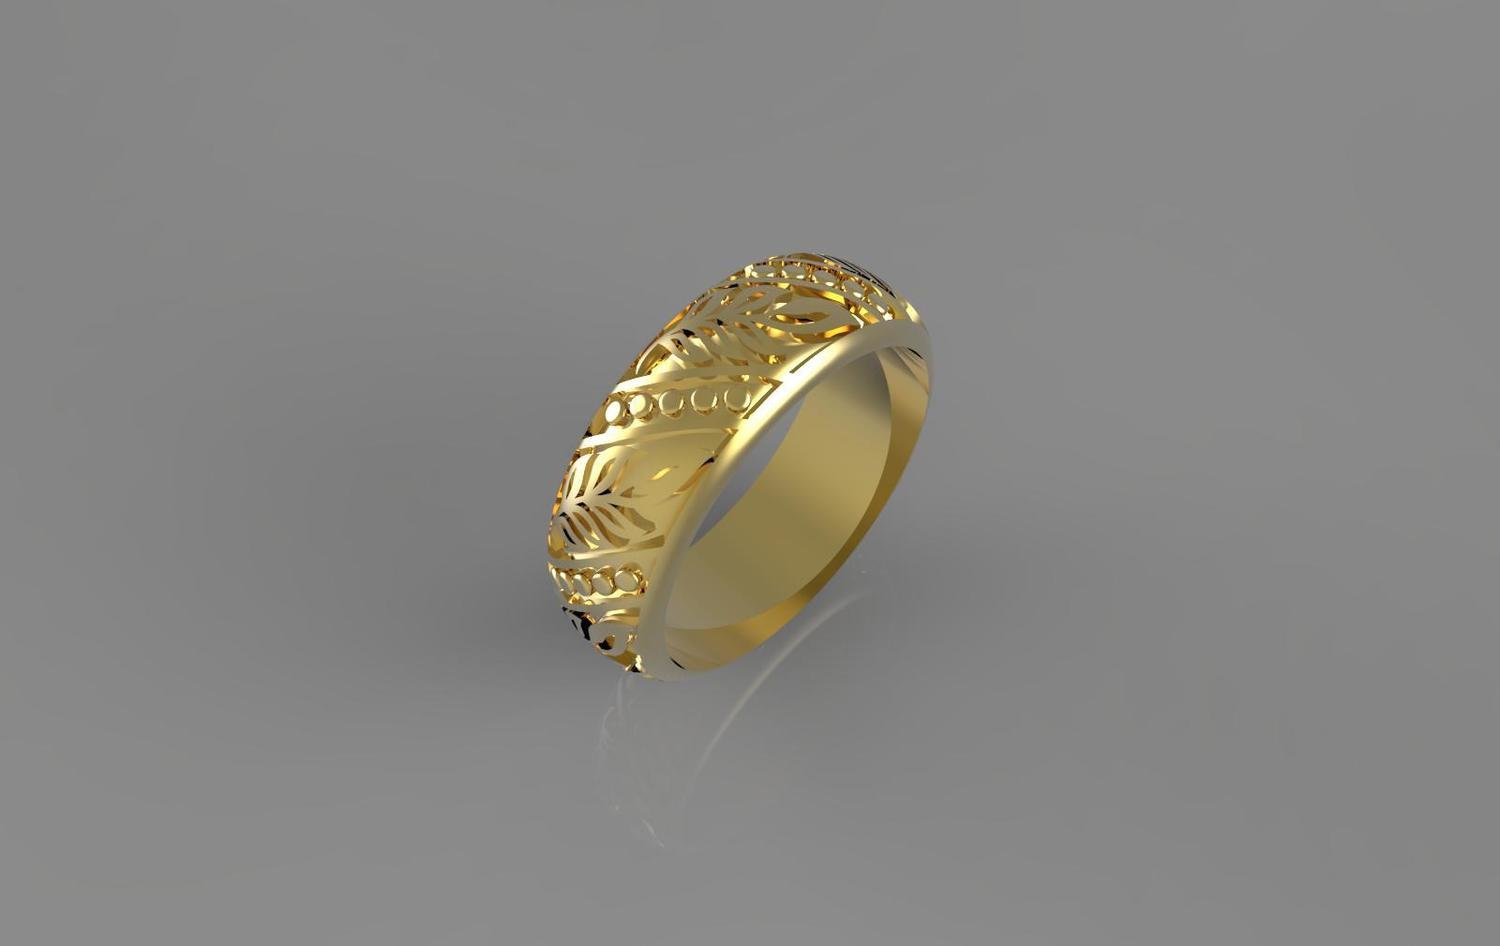 3D CAD Model of Wedding Ring